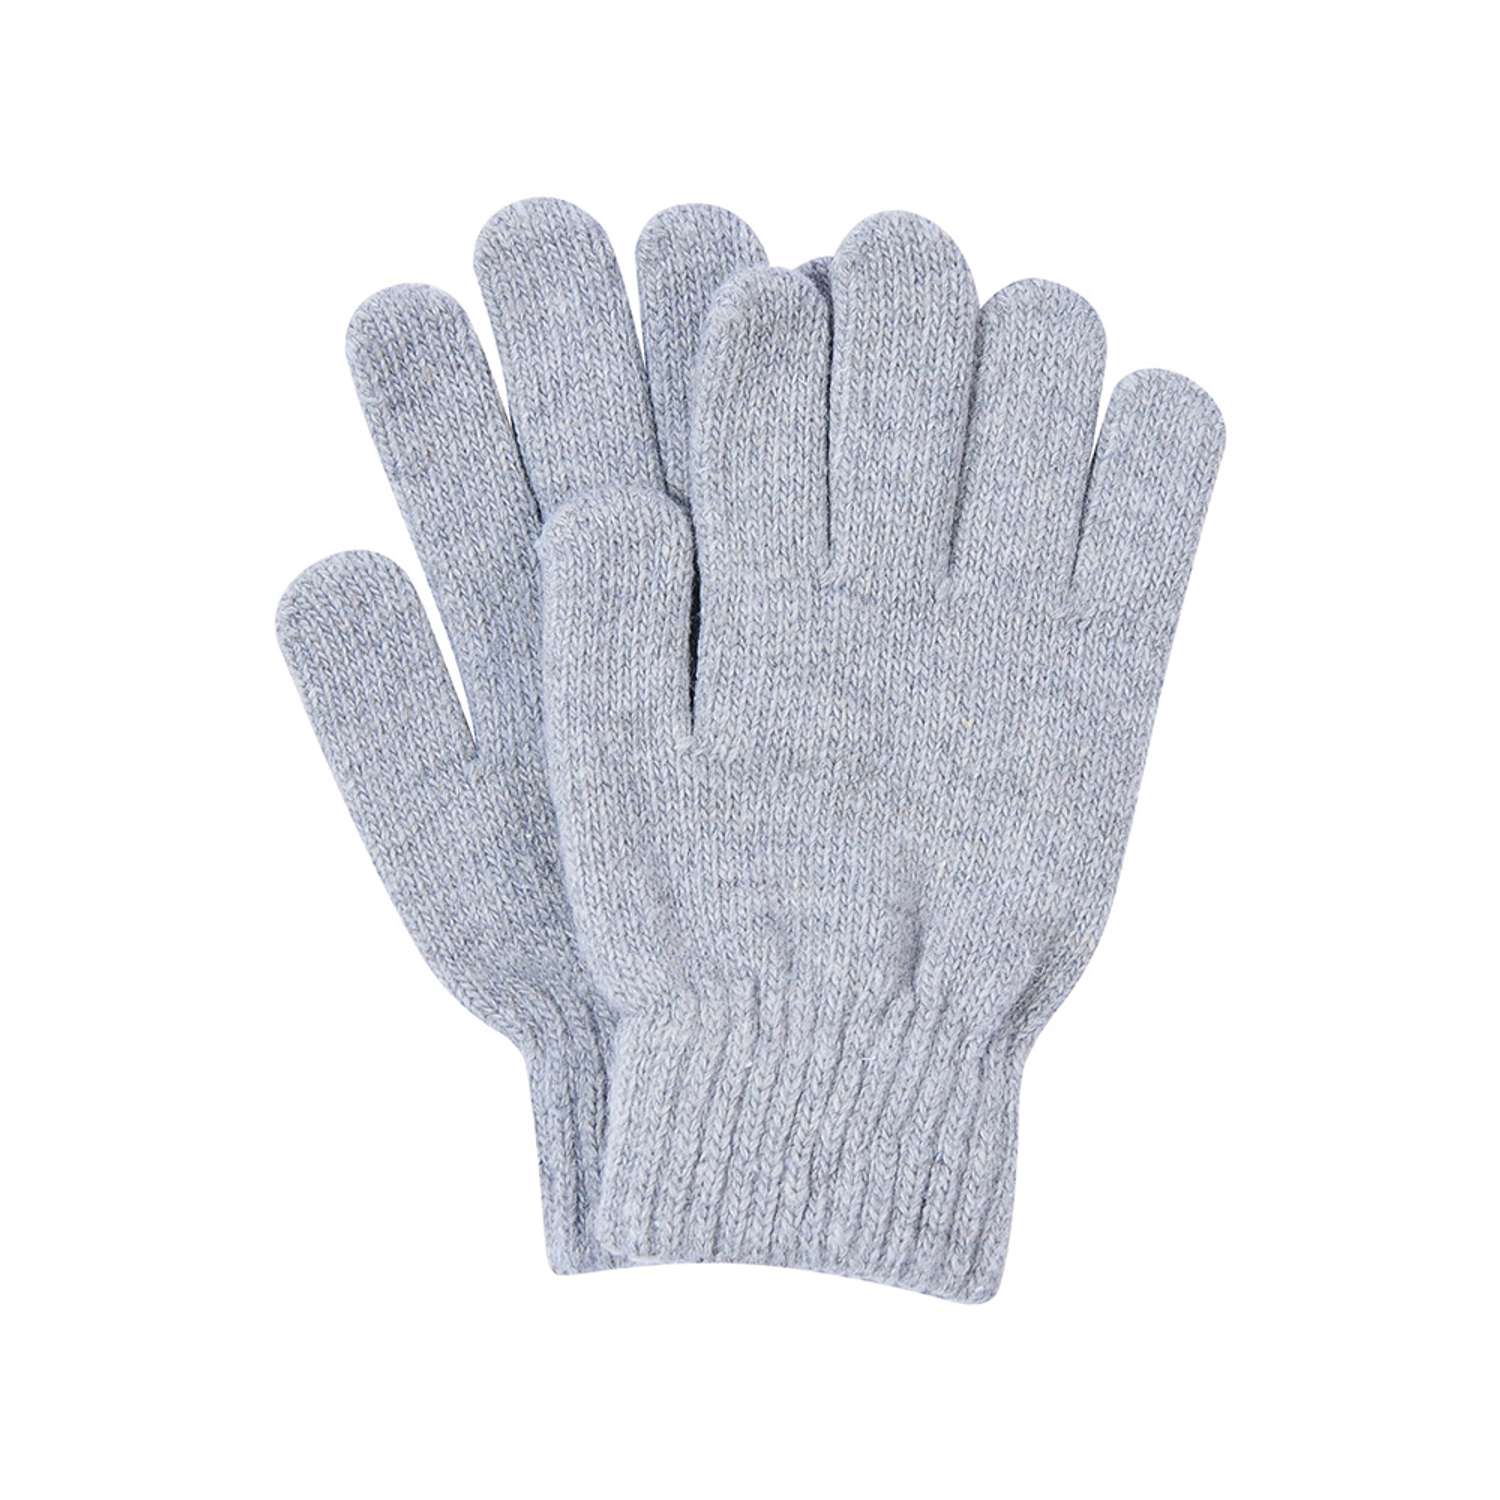 Перчатки S.gloves S 2163-M серый - фото 1